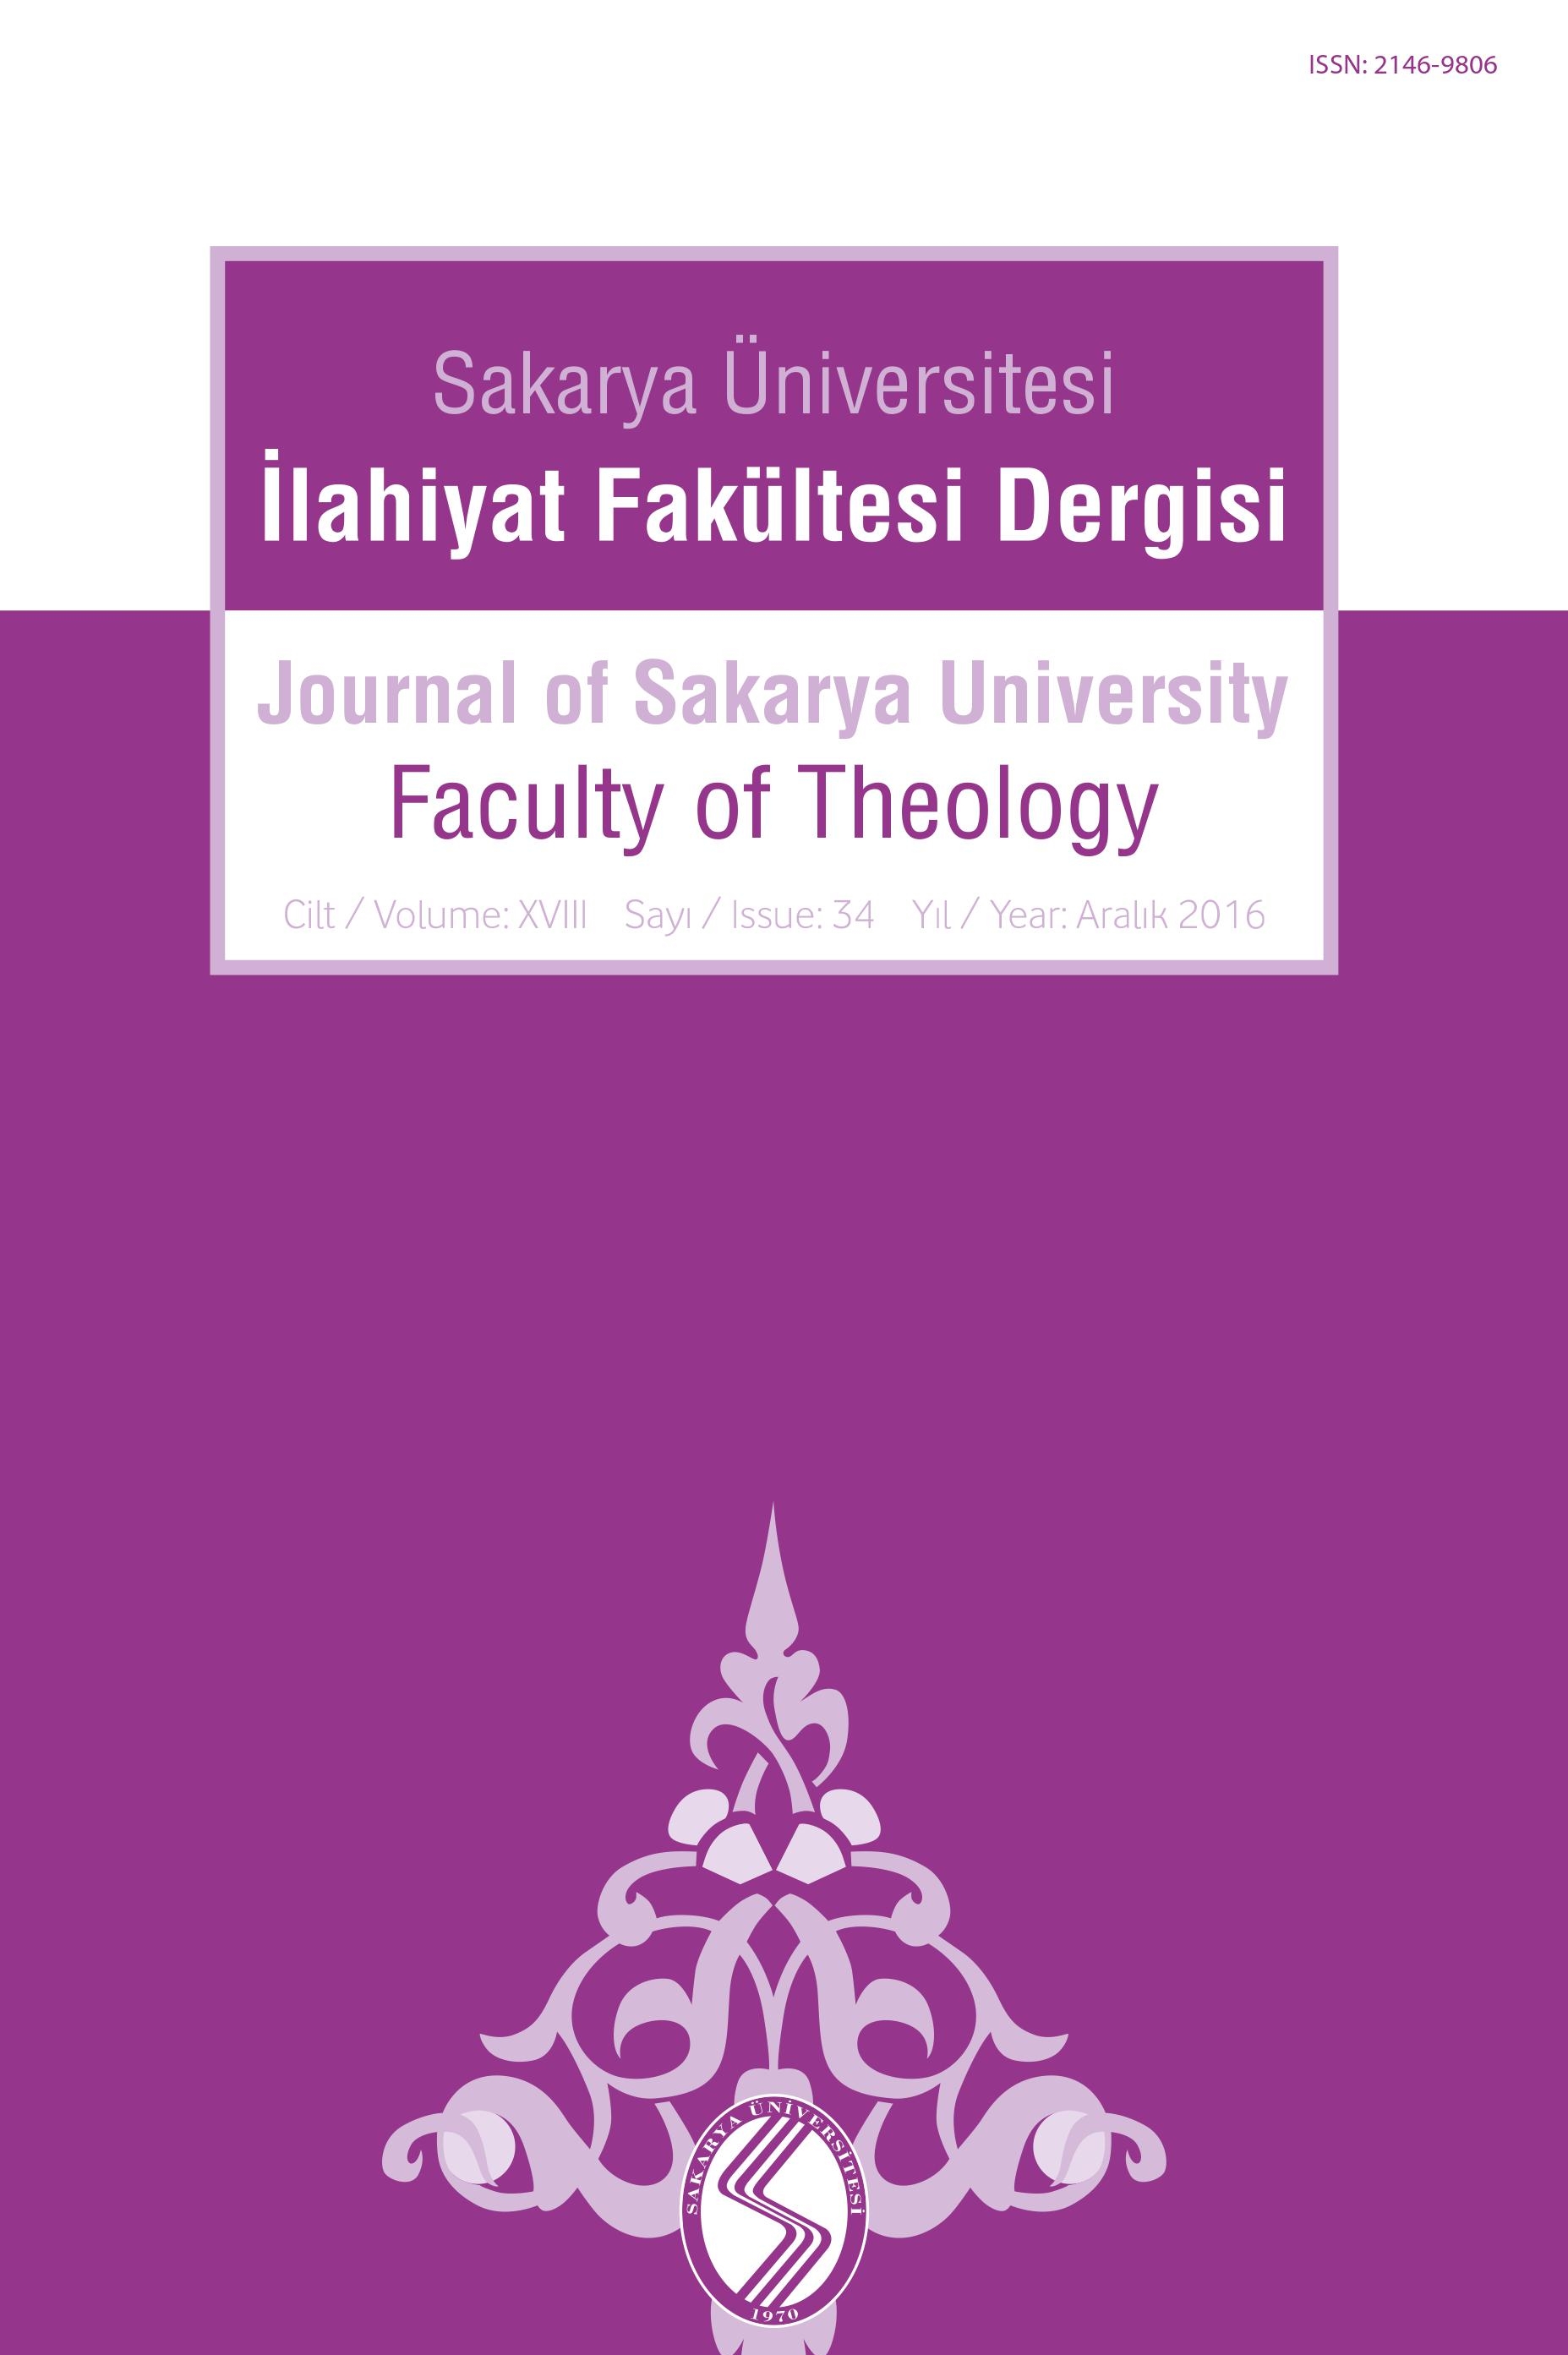 Sense of School Belonging Among Imam Hatip High School Students (Çorum Case) Cover Image